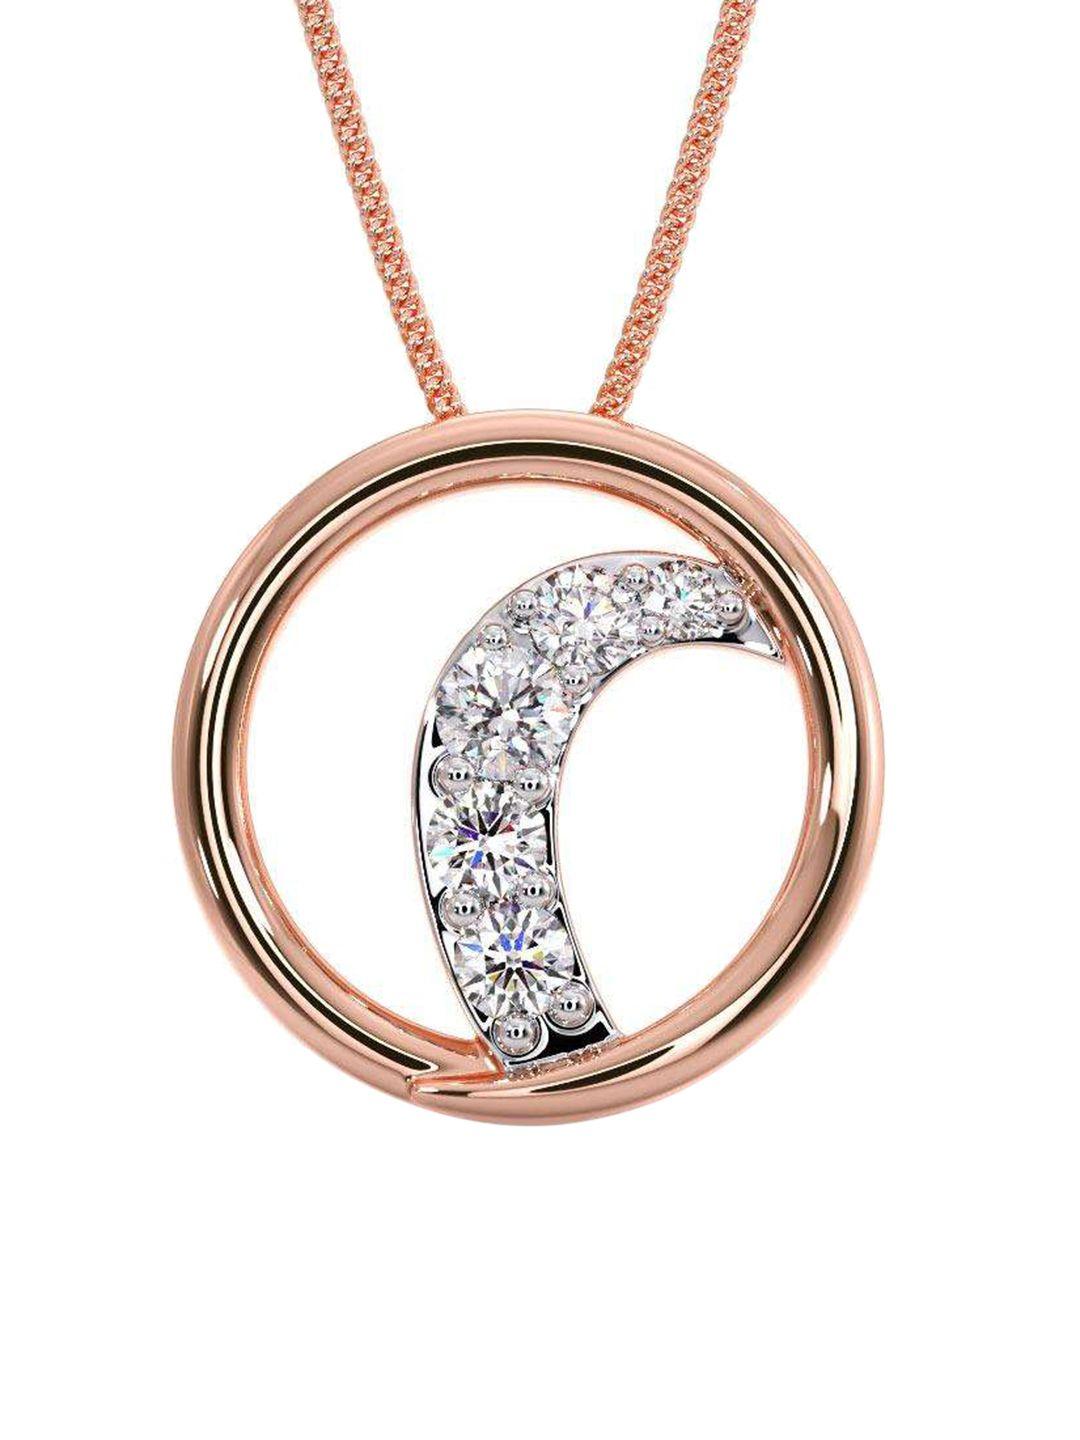 candere a kalyan jewellers company 18k rose gold & cz studded pendant